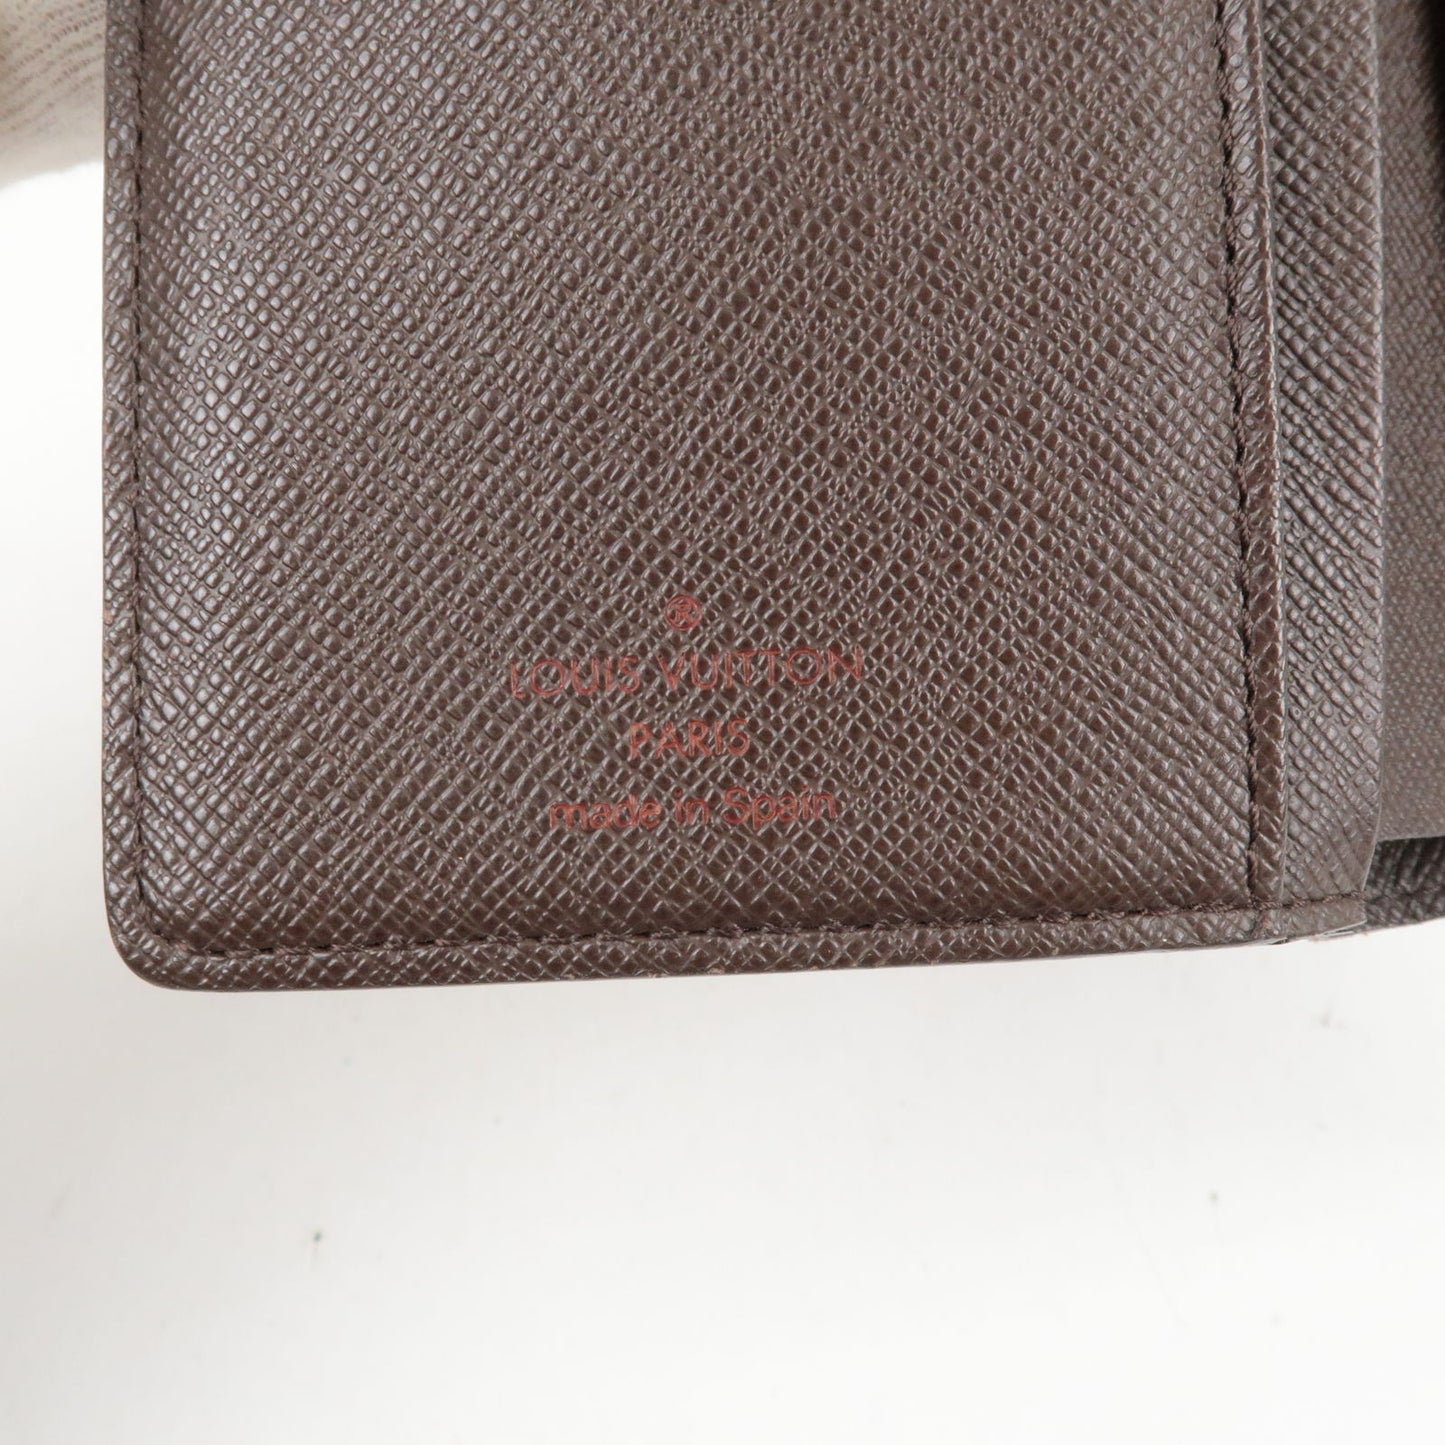 Louis Vuitton Damier Portefeuille Viennois Wallet N61674